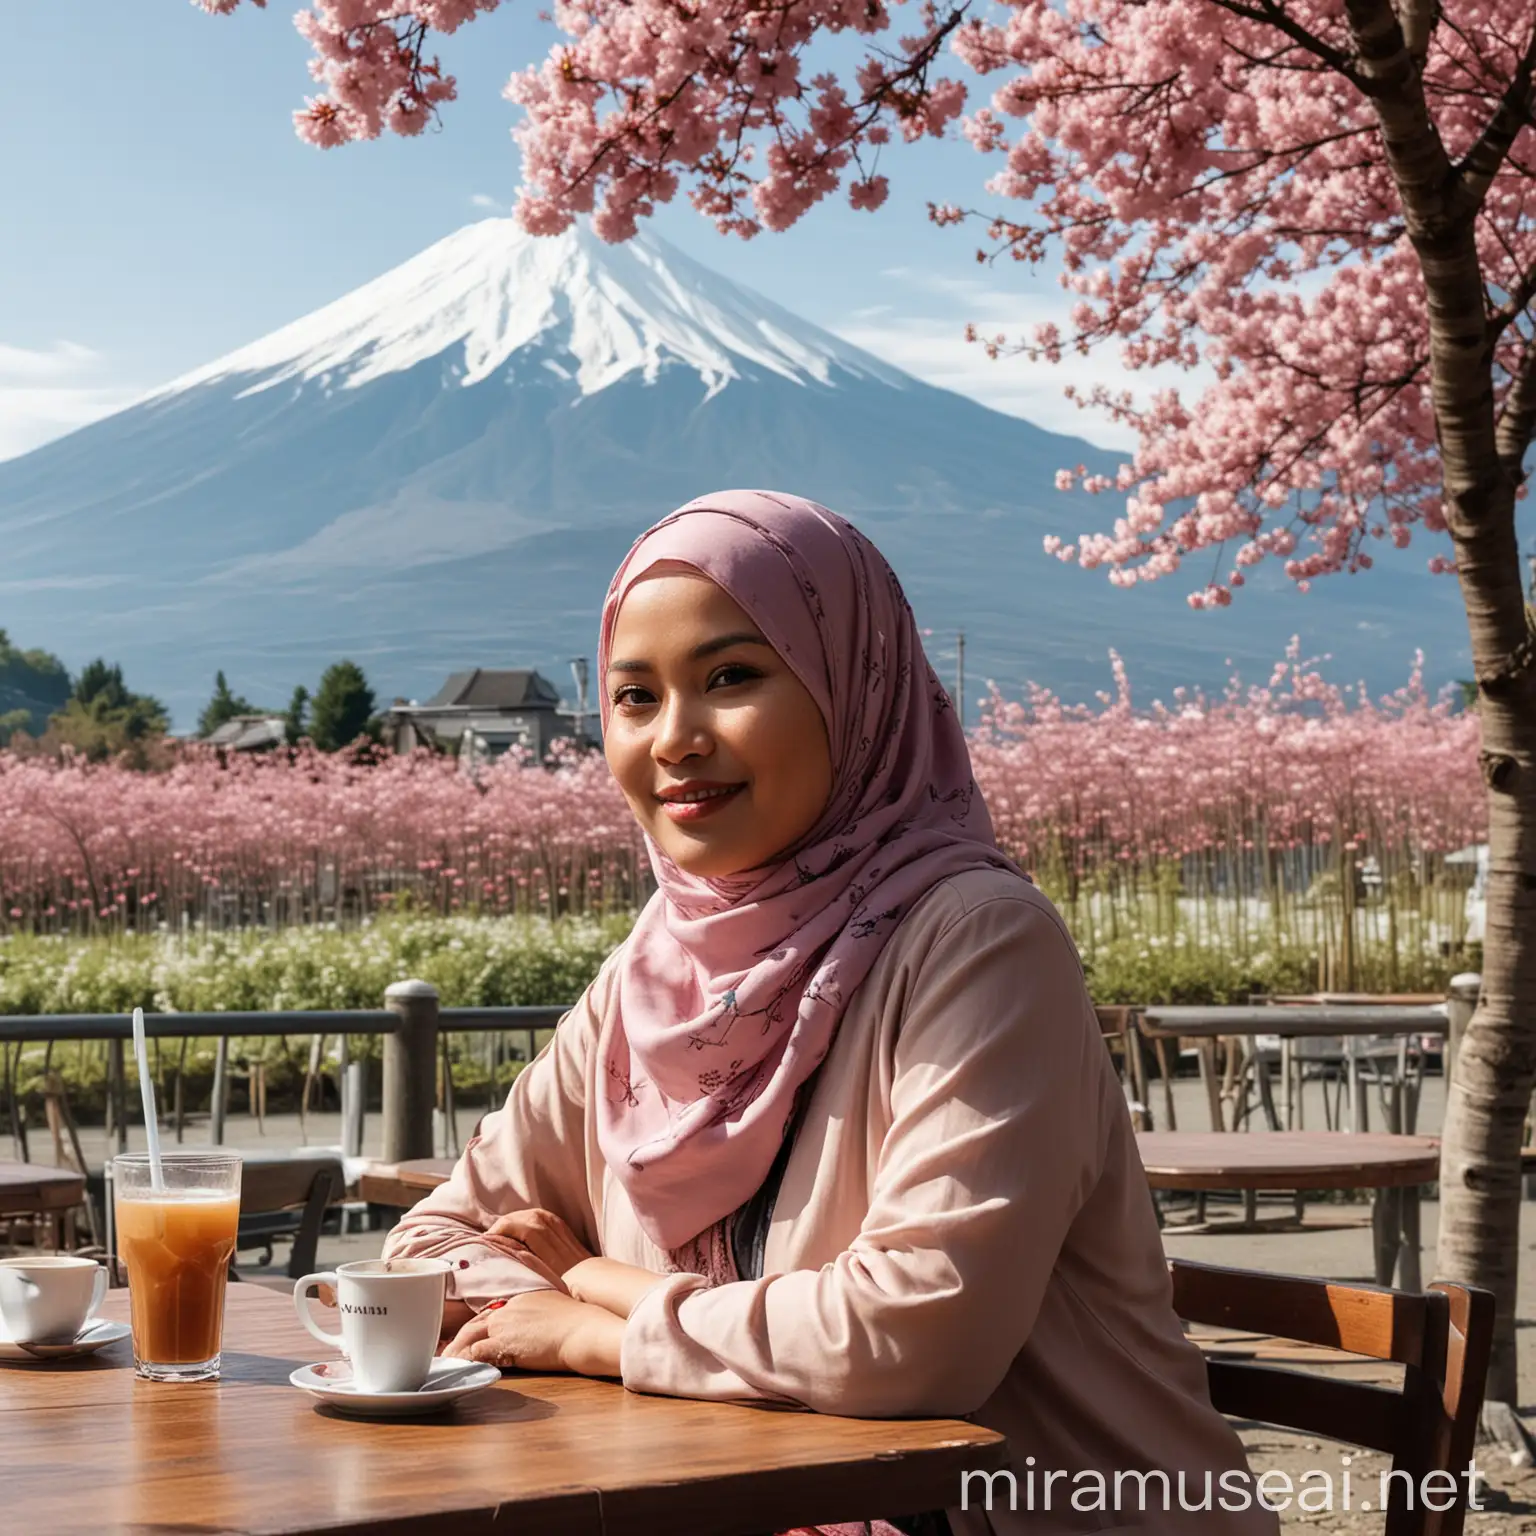 Trendy Casual Hijab Attire Indonesian Woman Enjoying Mount Fuji View